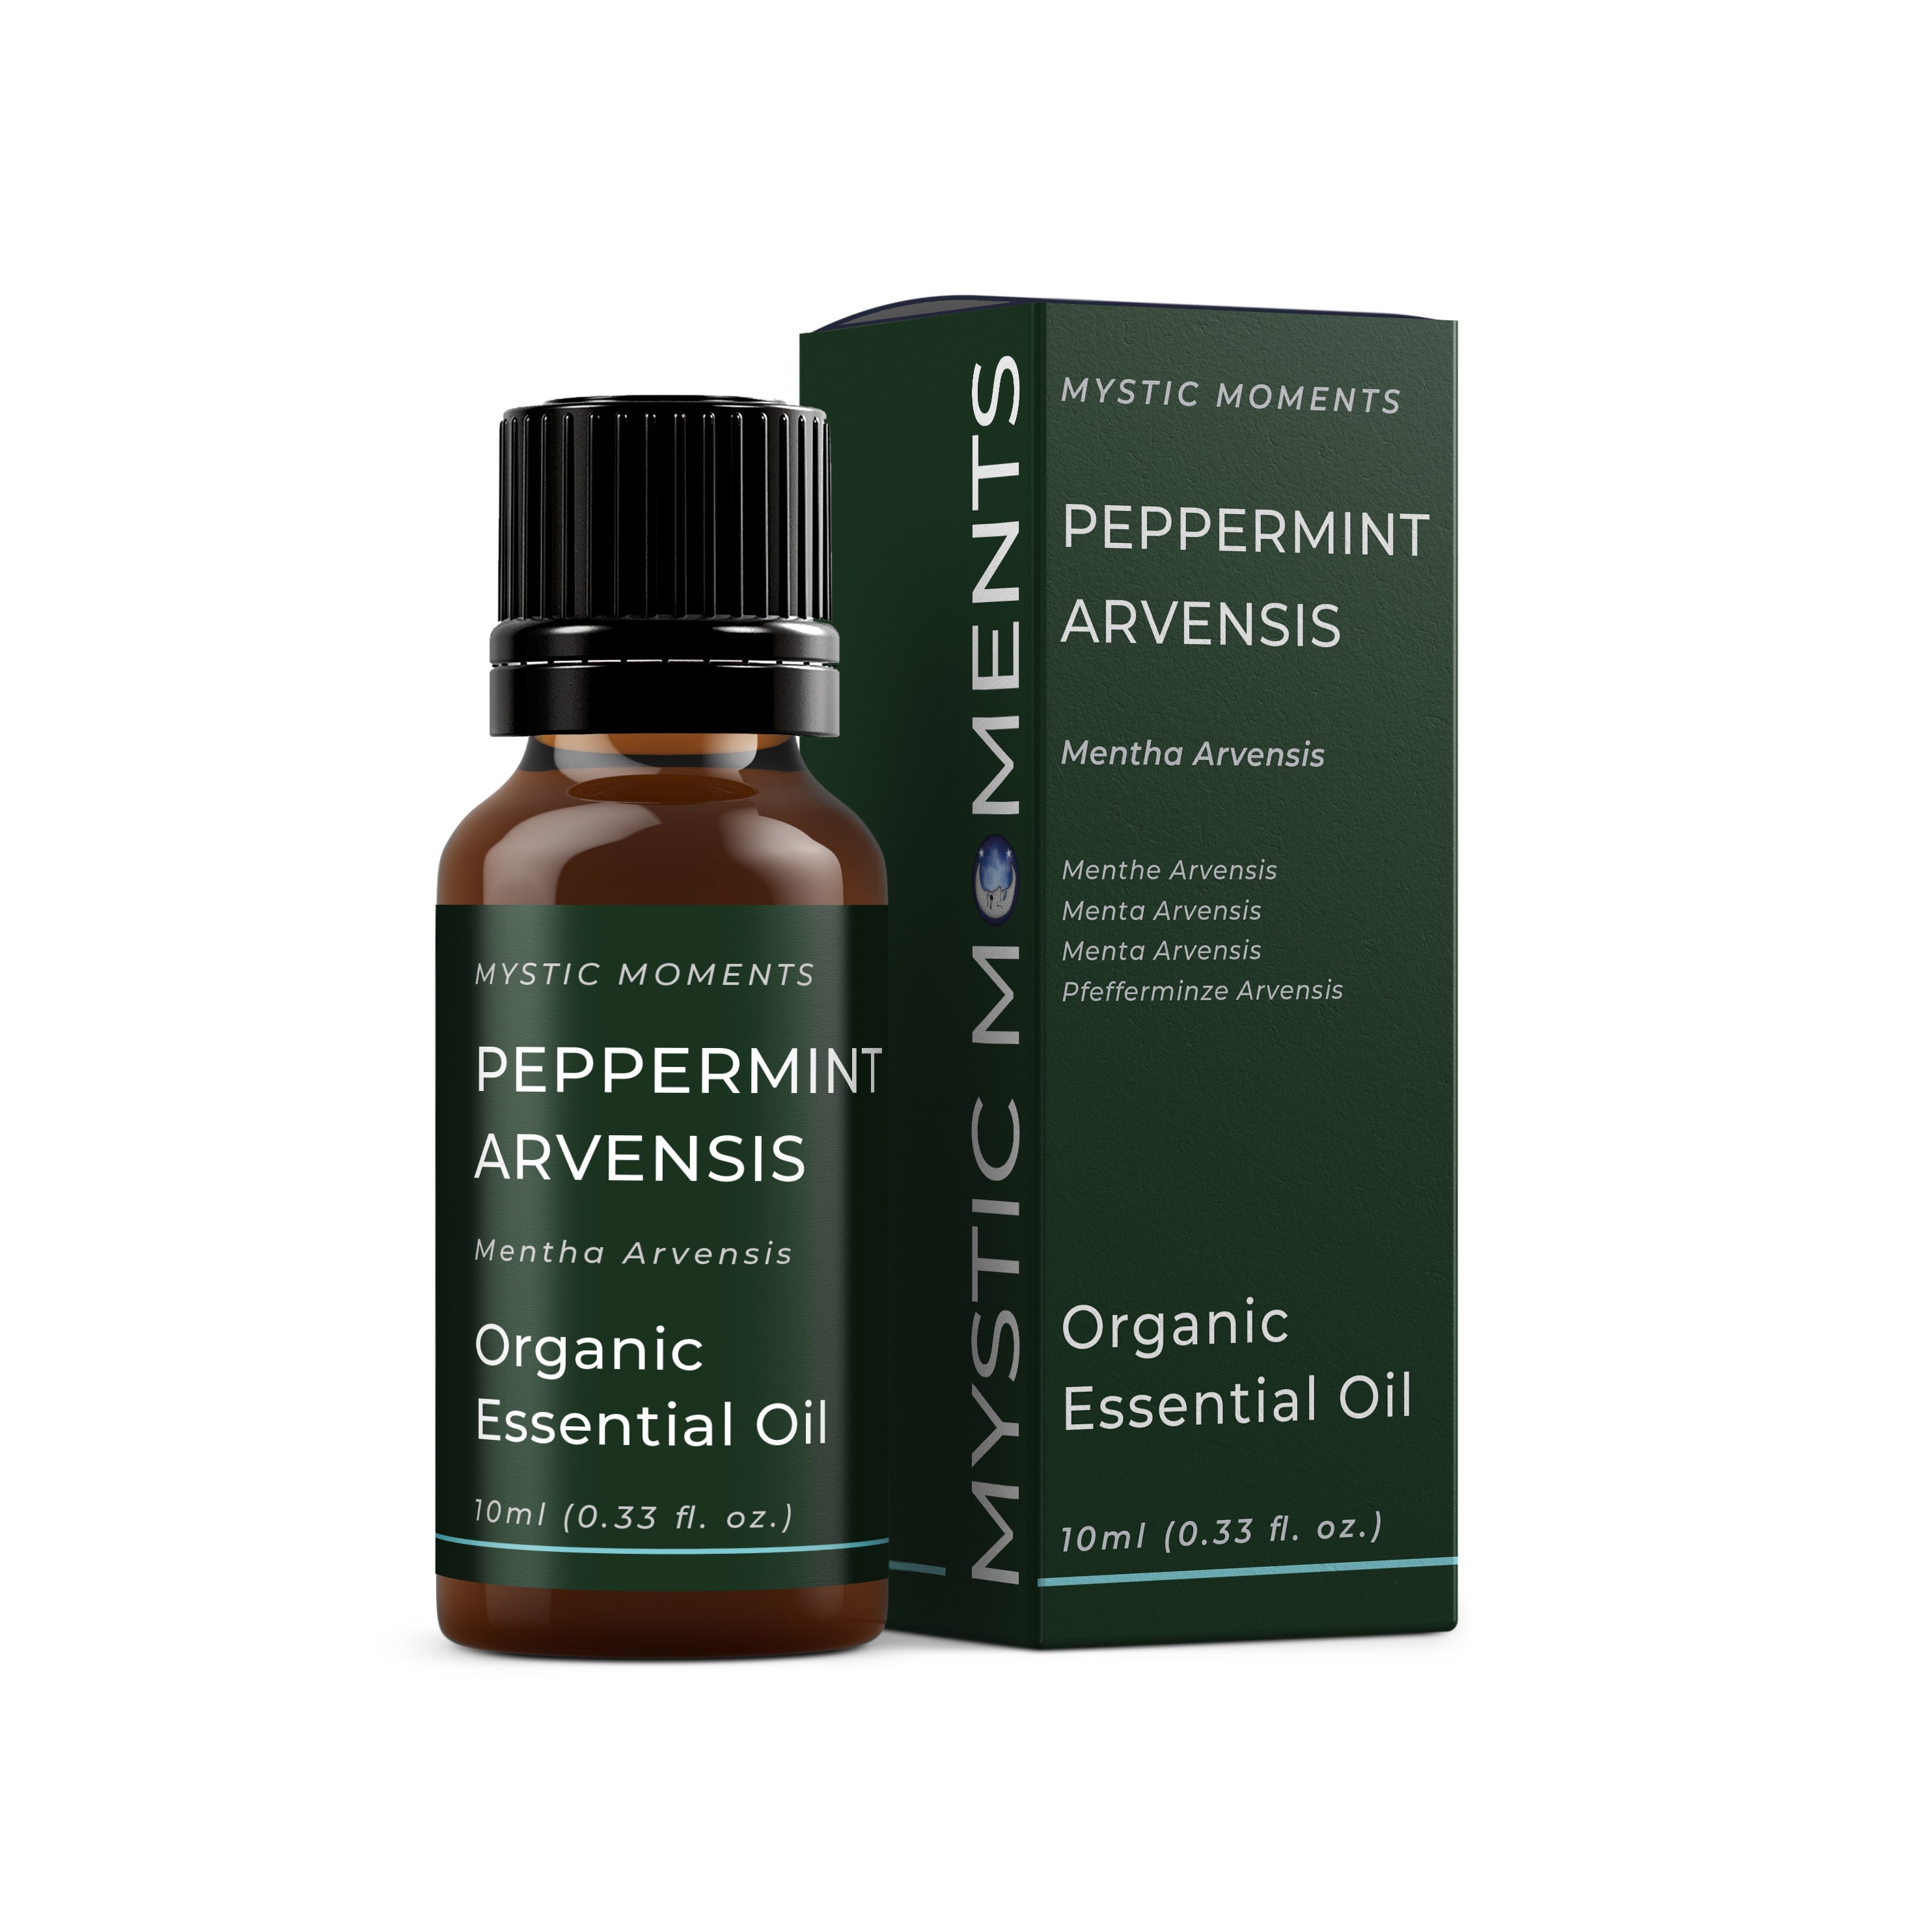 Peppermint Arvensis Essential Oil (Organic)